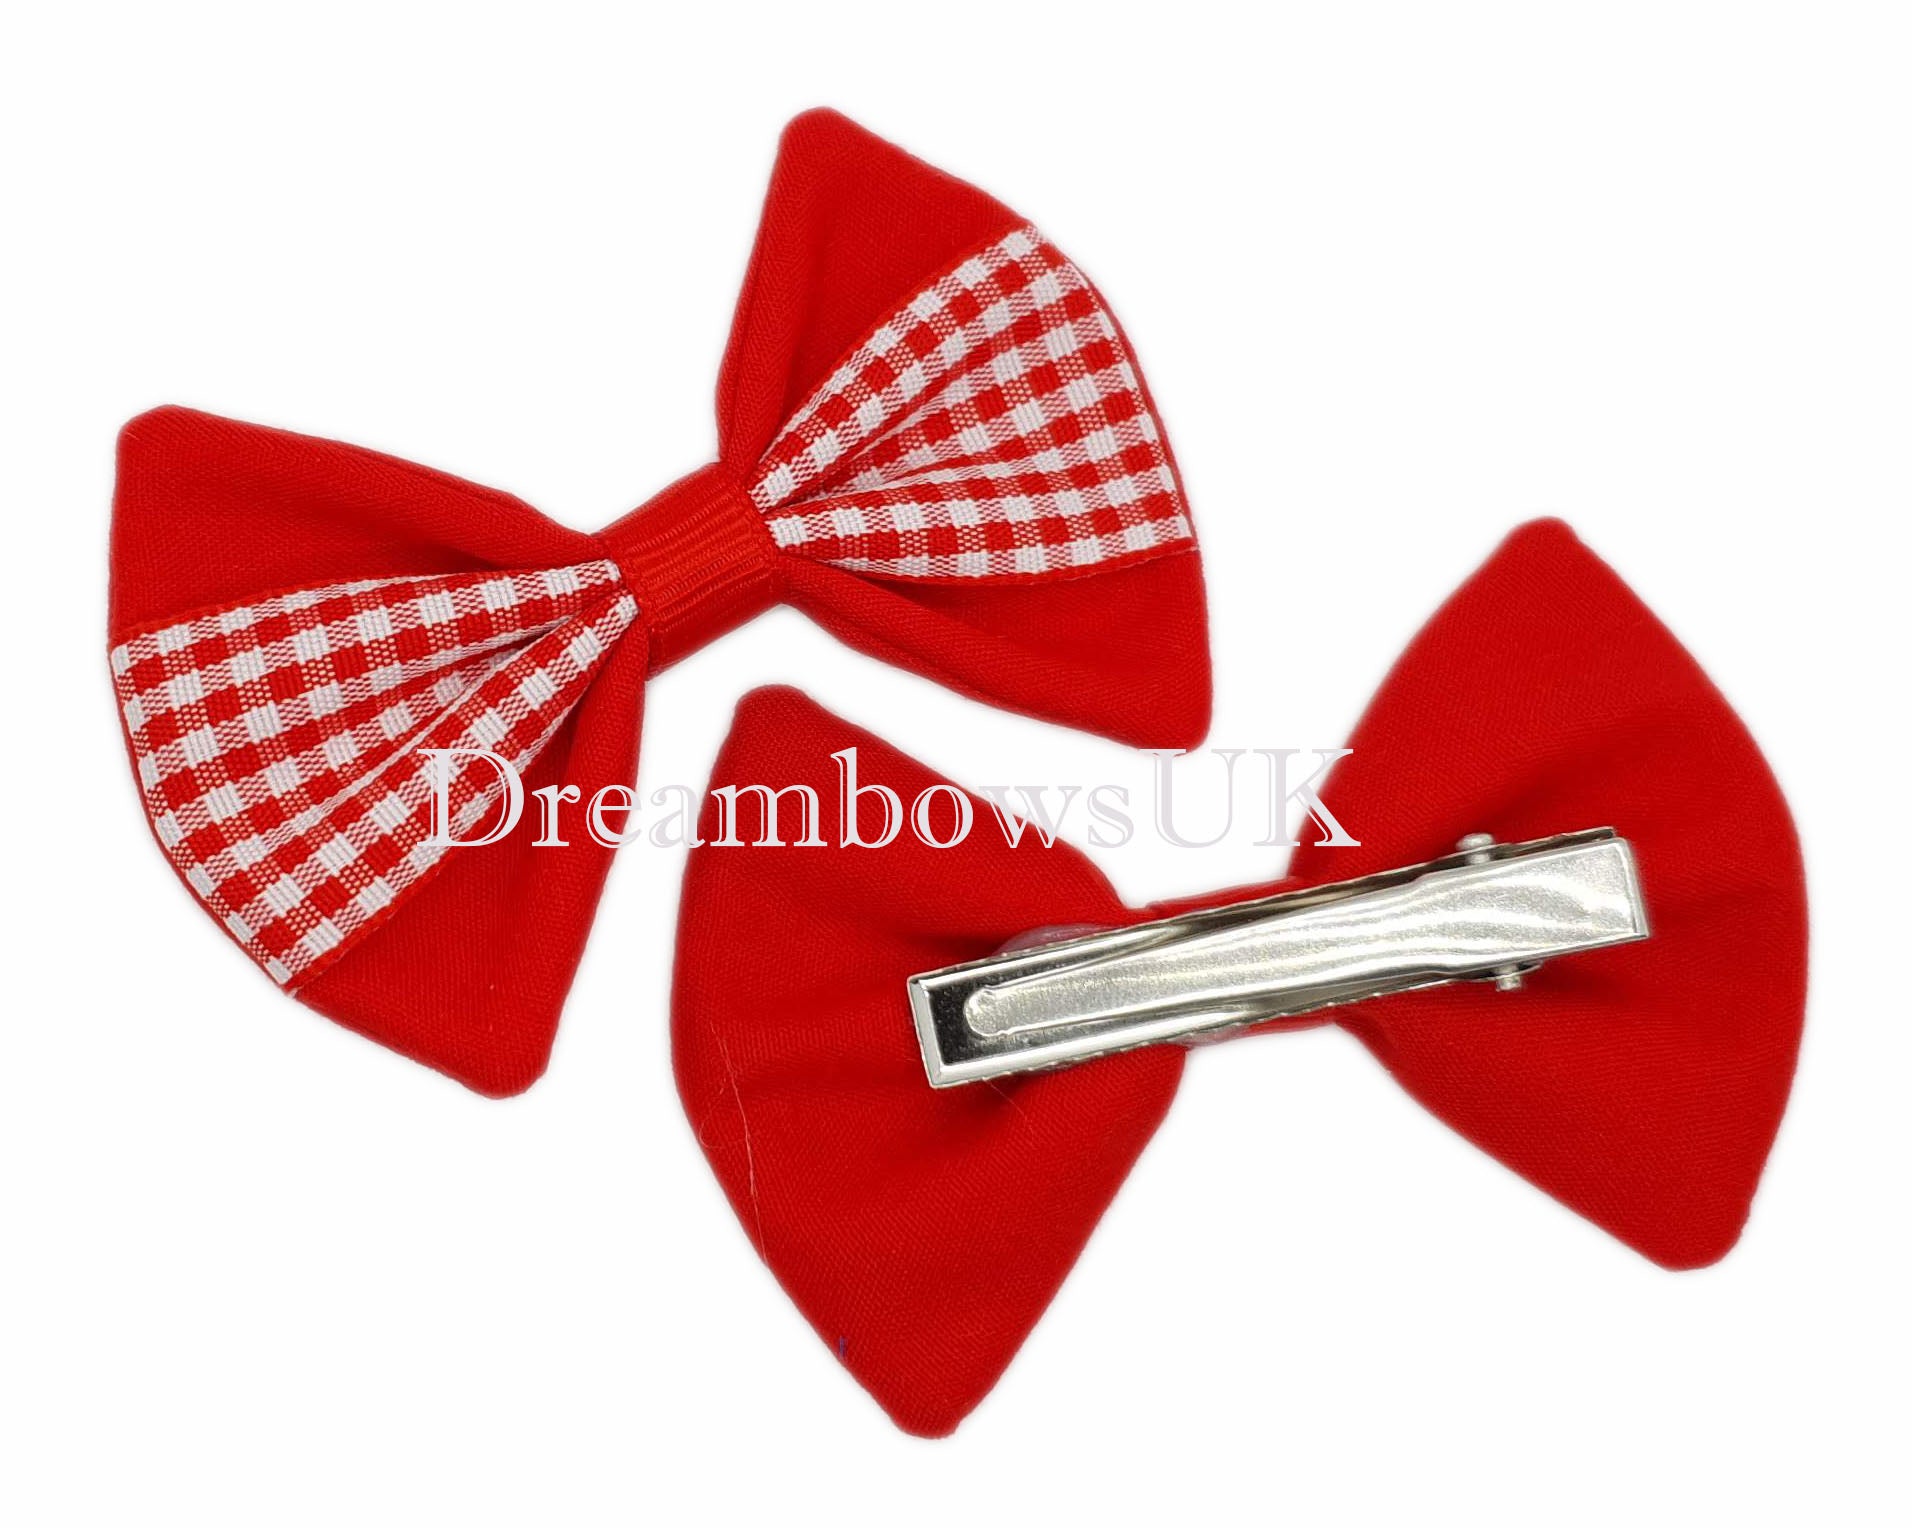 2x Red gingham hair bows - DreambowsUK